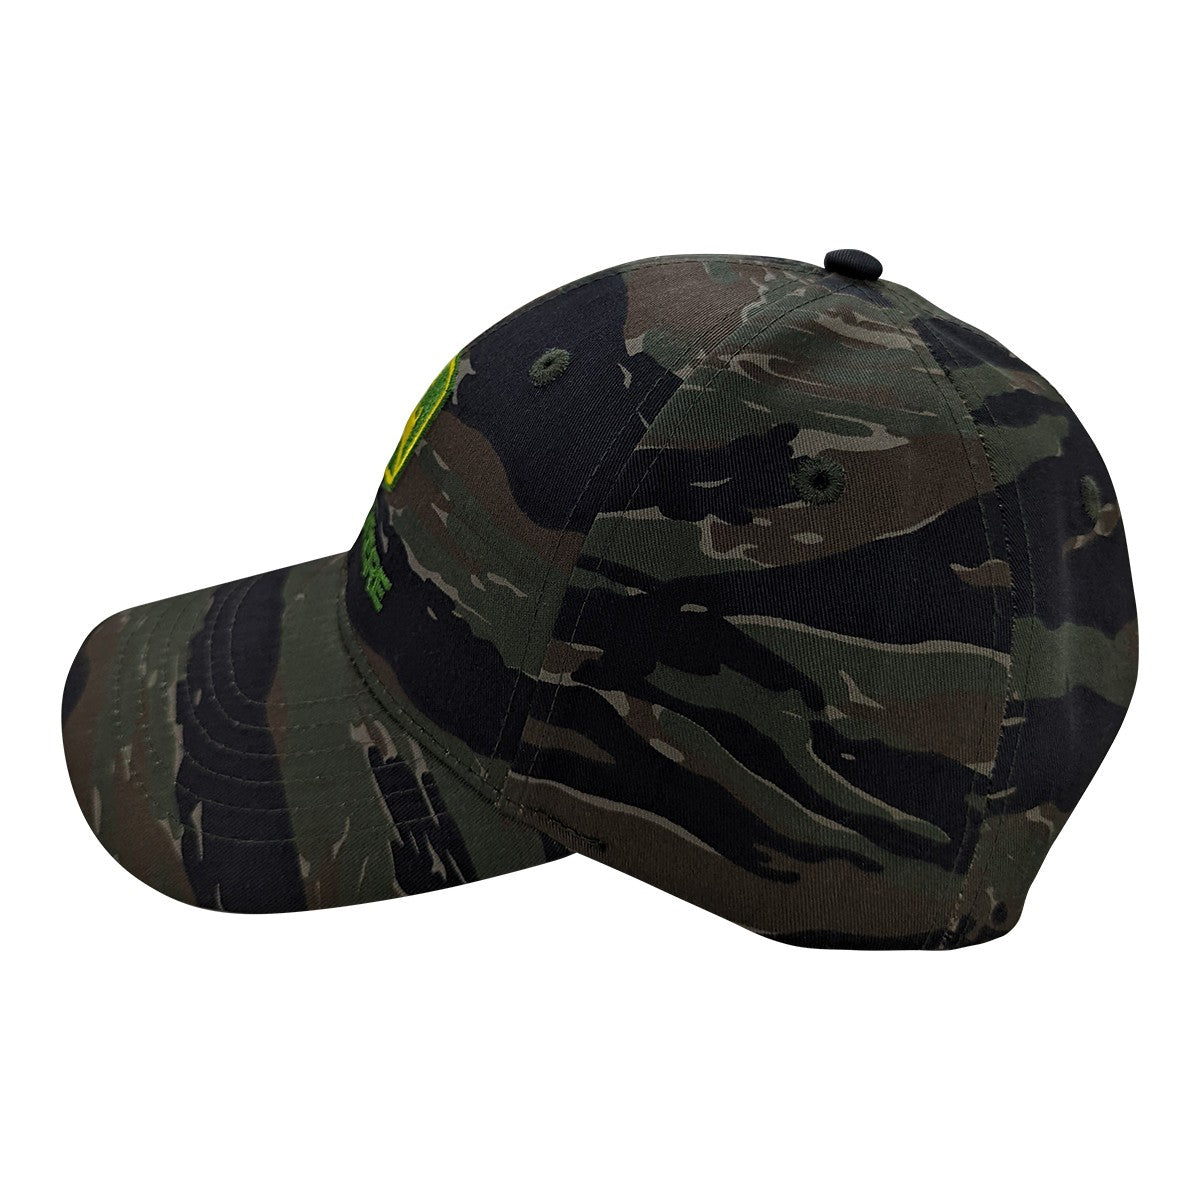 John Deere Camouflage Baseball Cap